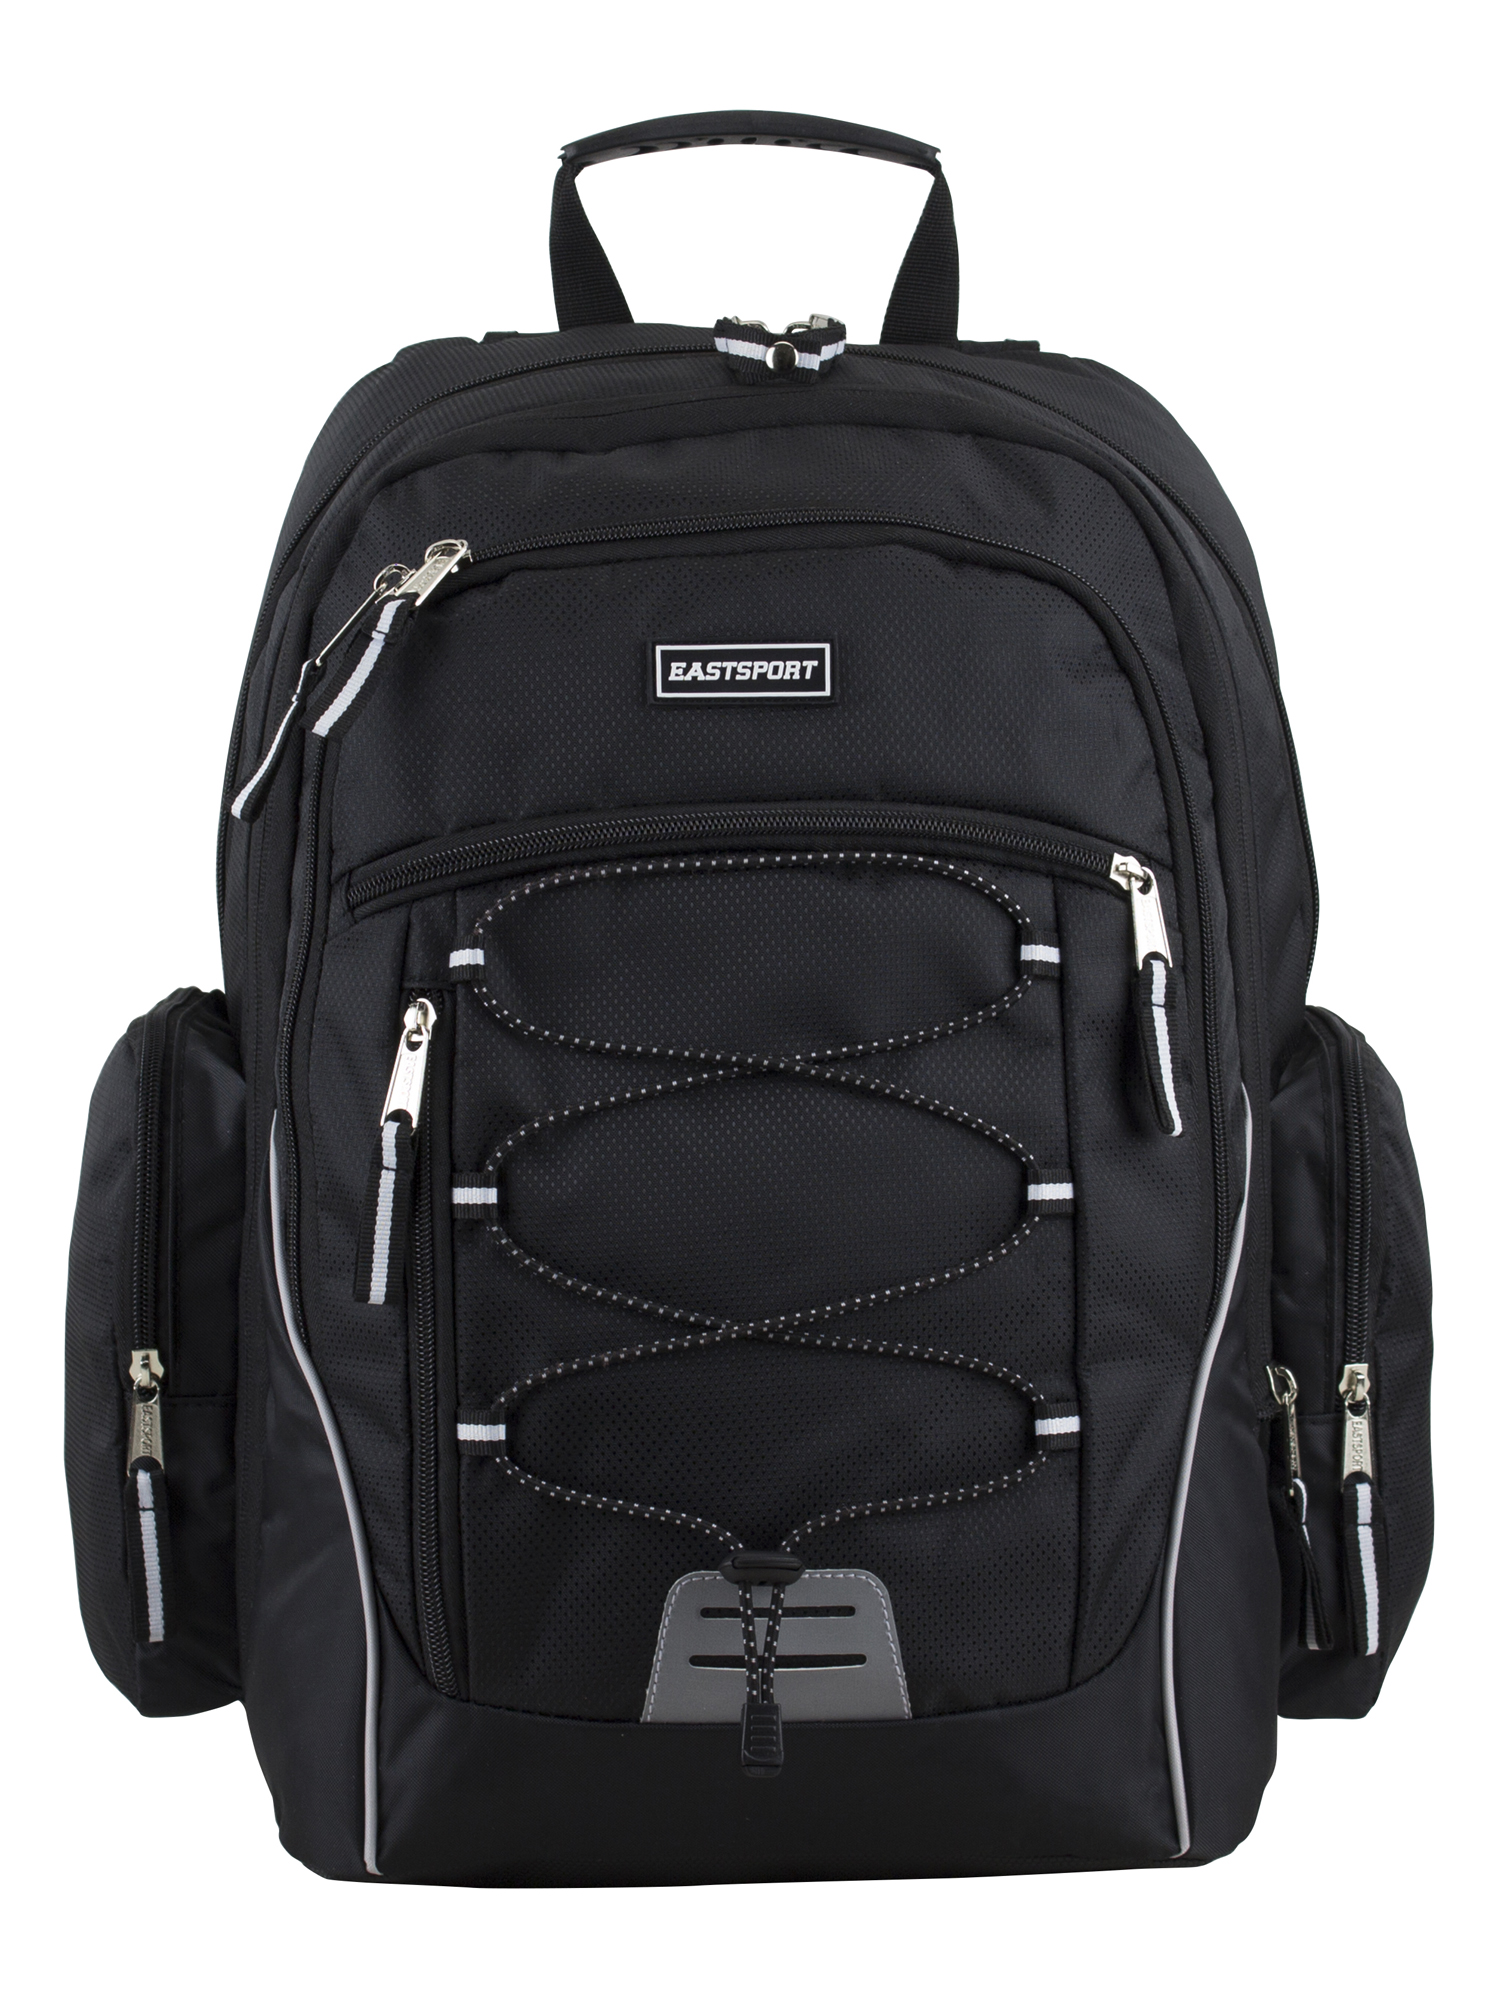 Eastsport Optimus Backpack, Black - image 1 of 7